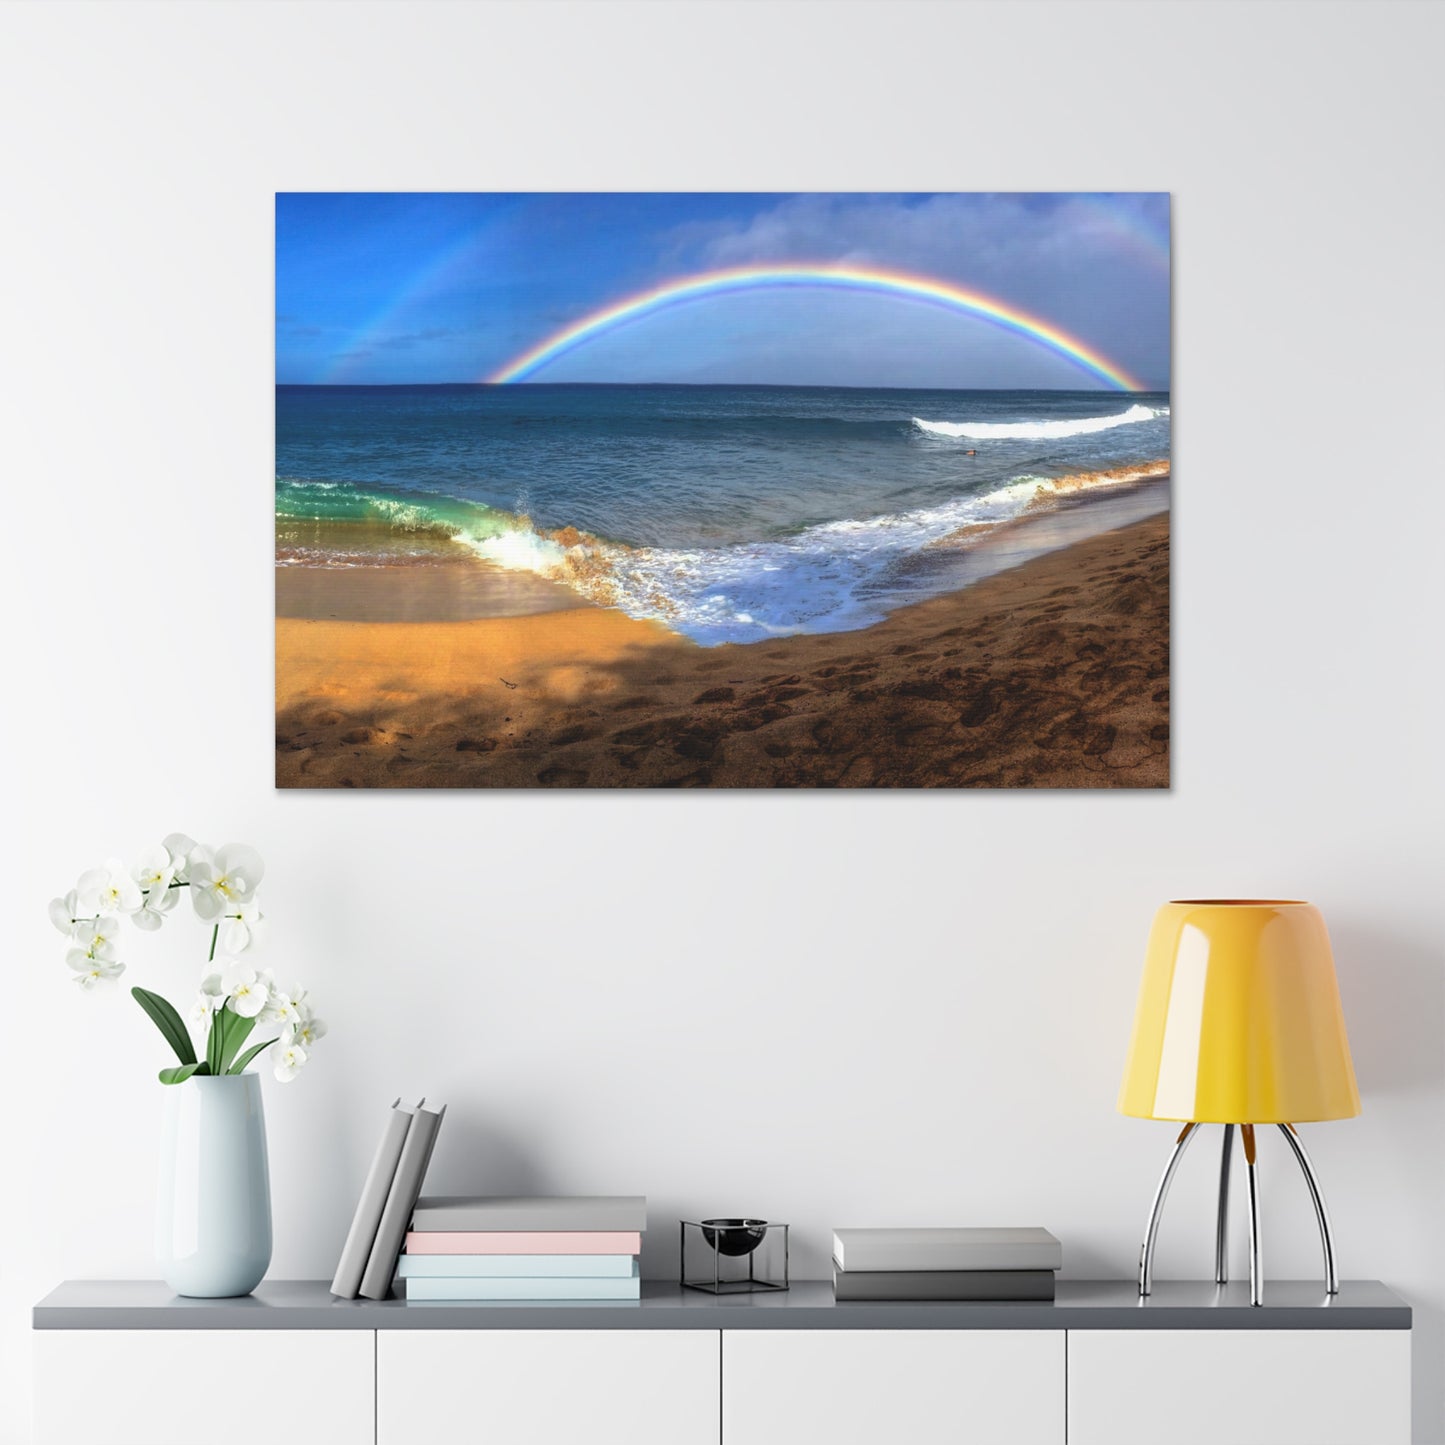 Canvas Print Of A Rainbow On The Beach In Hawaii For Wall Art